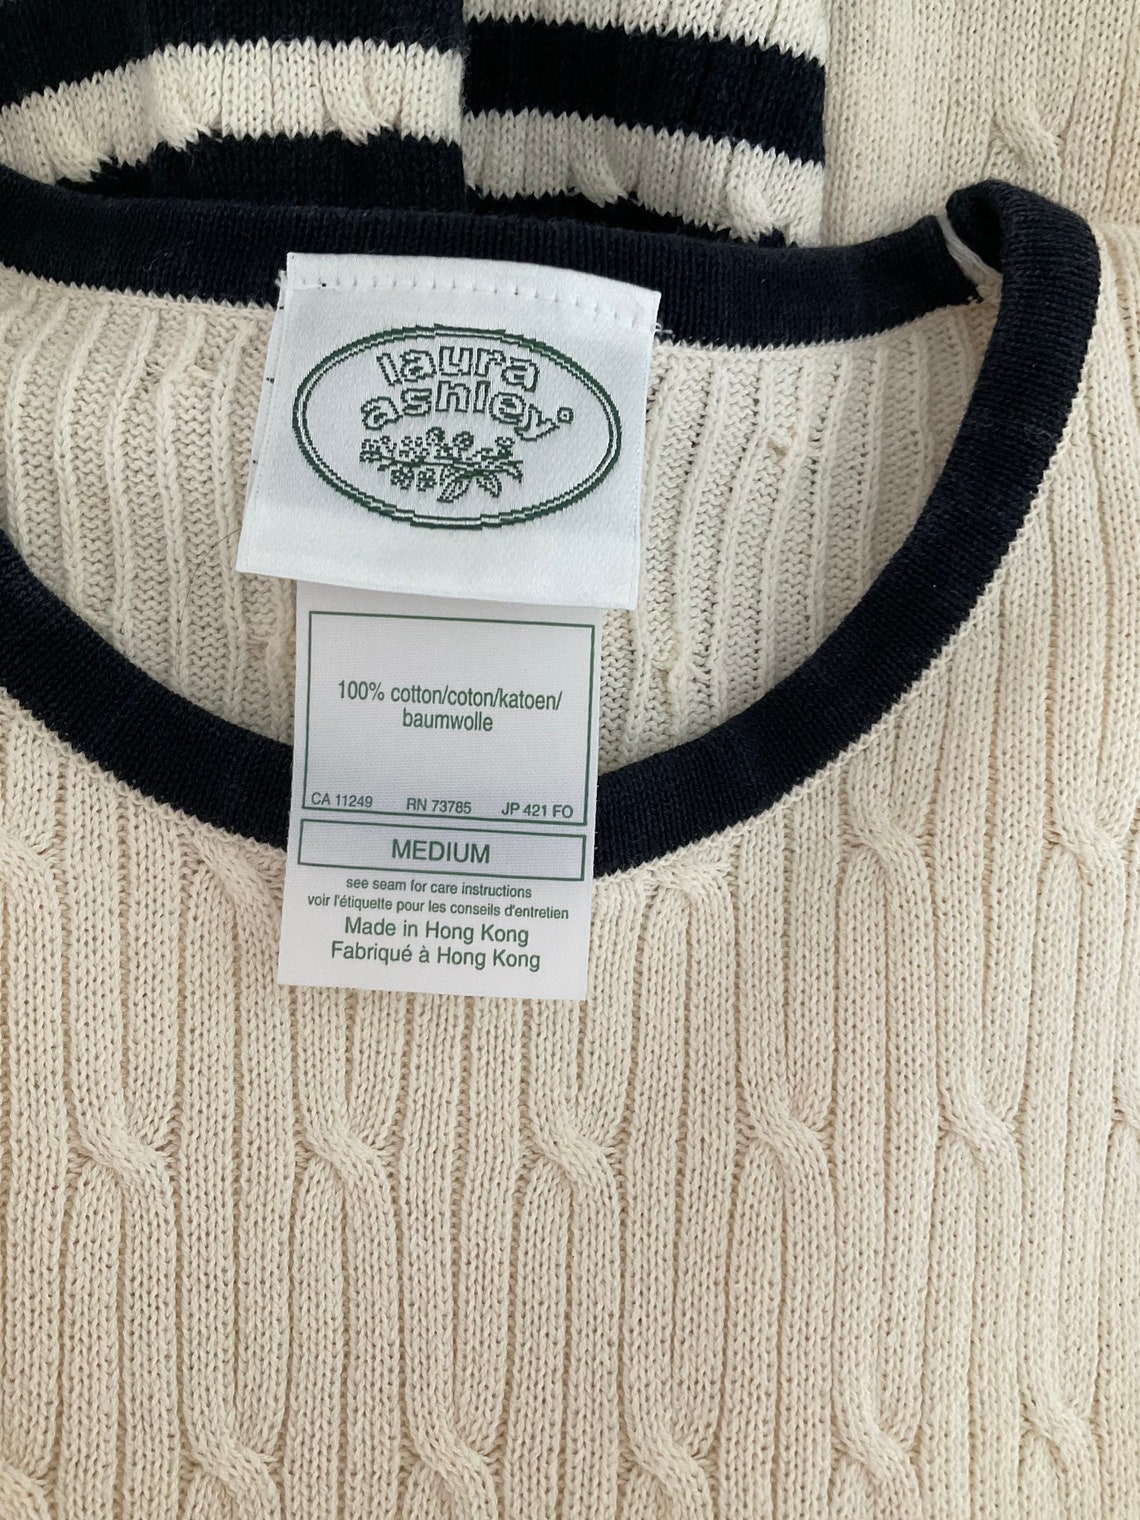 Laura Ashley Vintage Jumper 90's Jumper Cotton Knit - Etsy